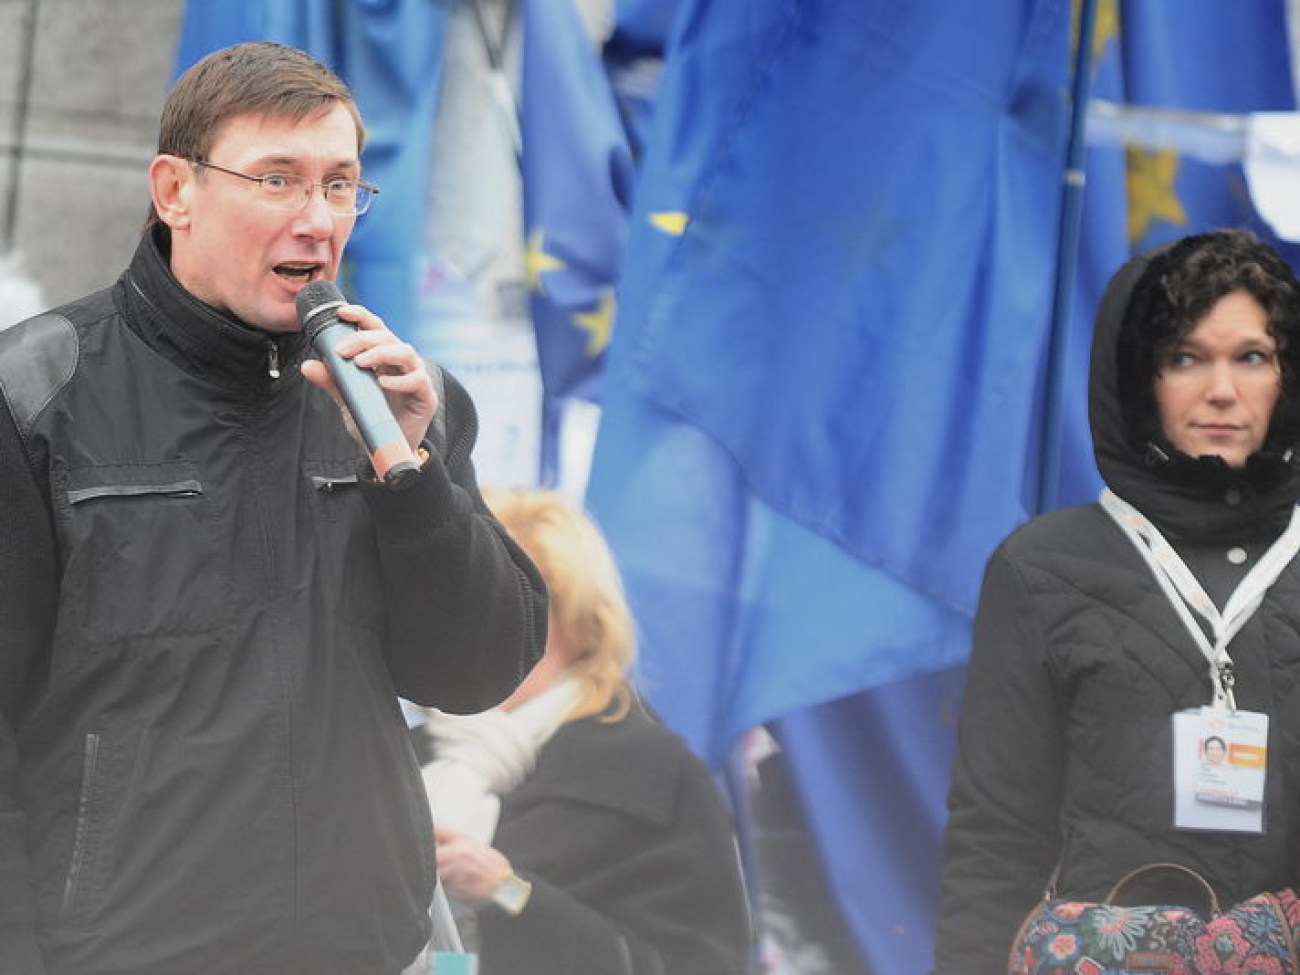 Евромайдан может скоро разойтись, 28 ноября 2013г.